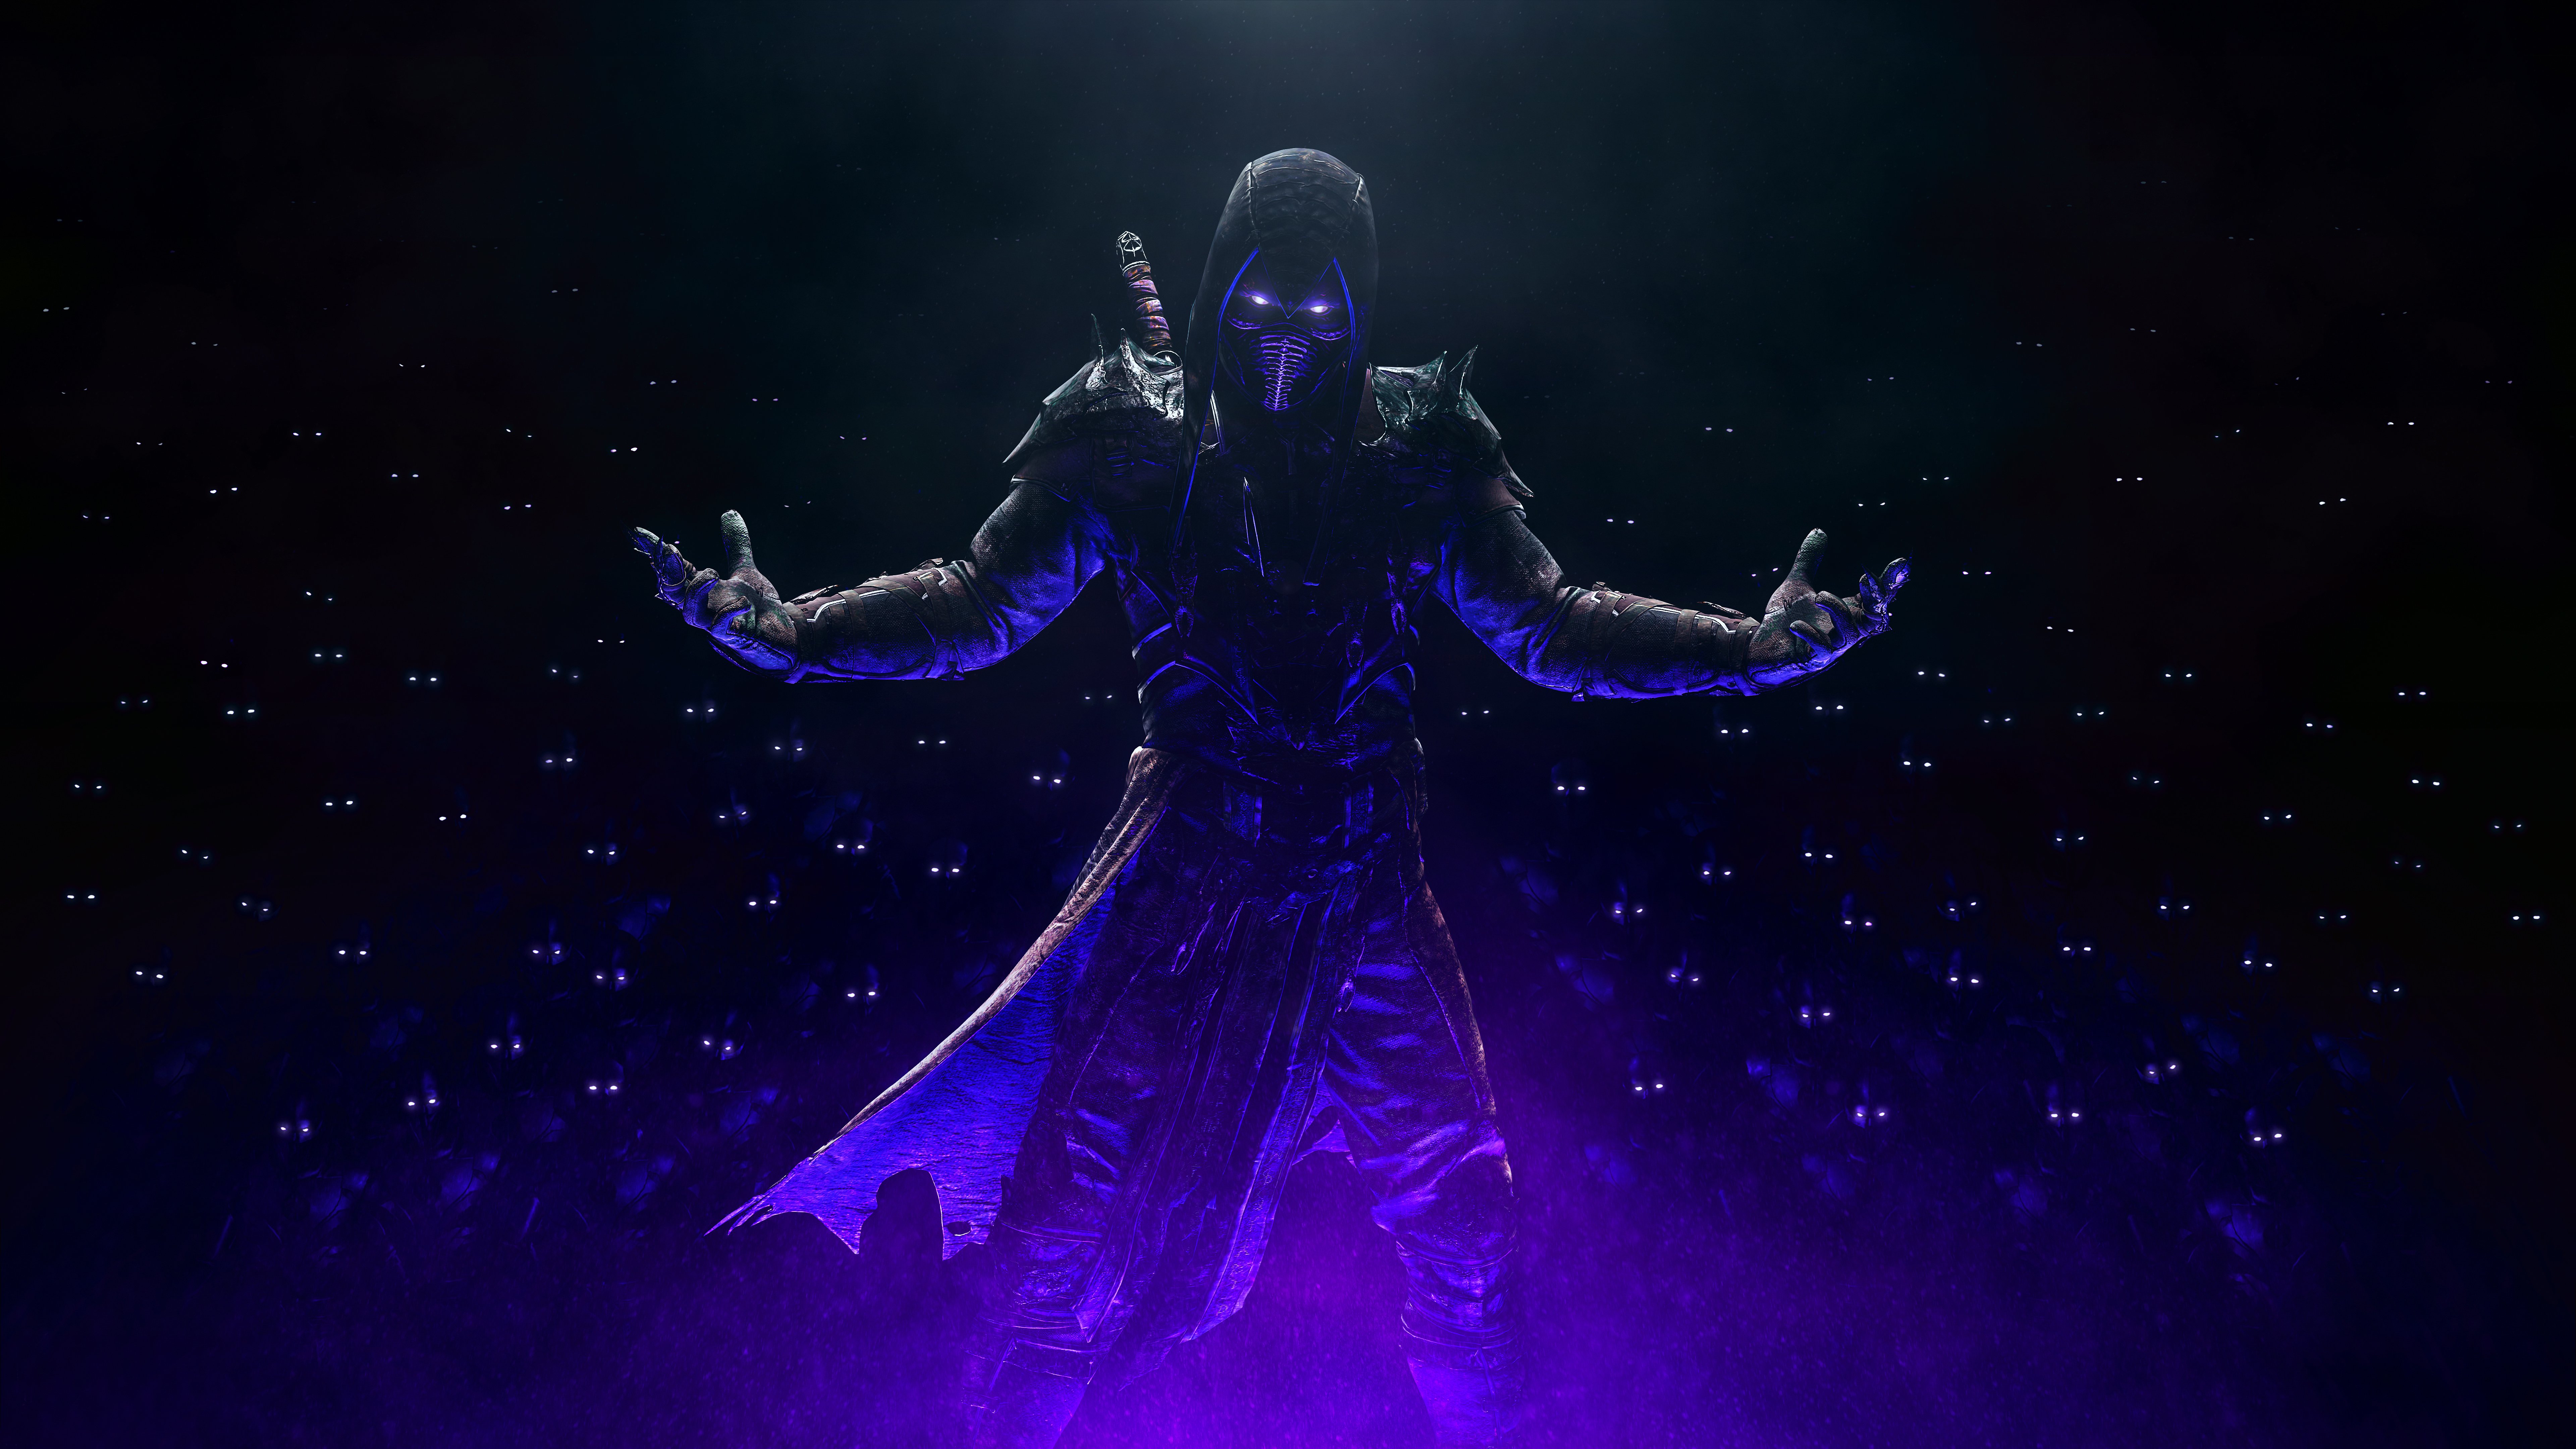 Noob Saibot Mortal Kombat HD Games, 4k Wallpaper, Image, Background, Photo and Picture